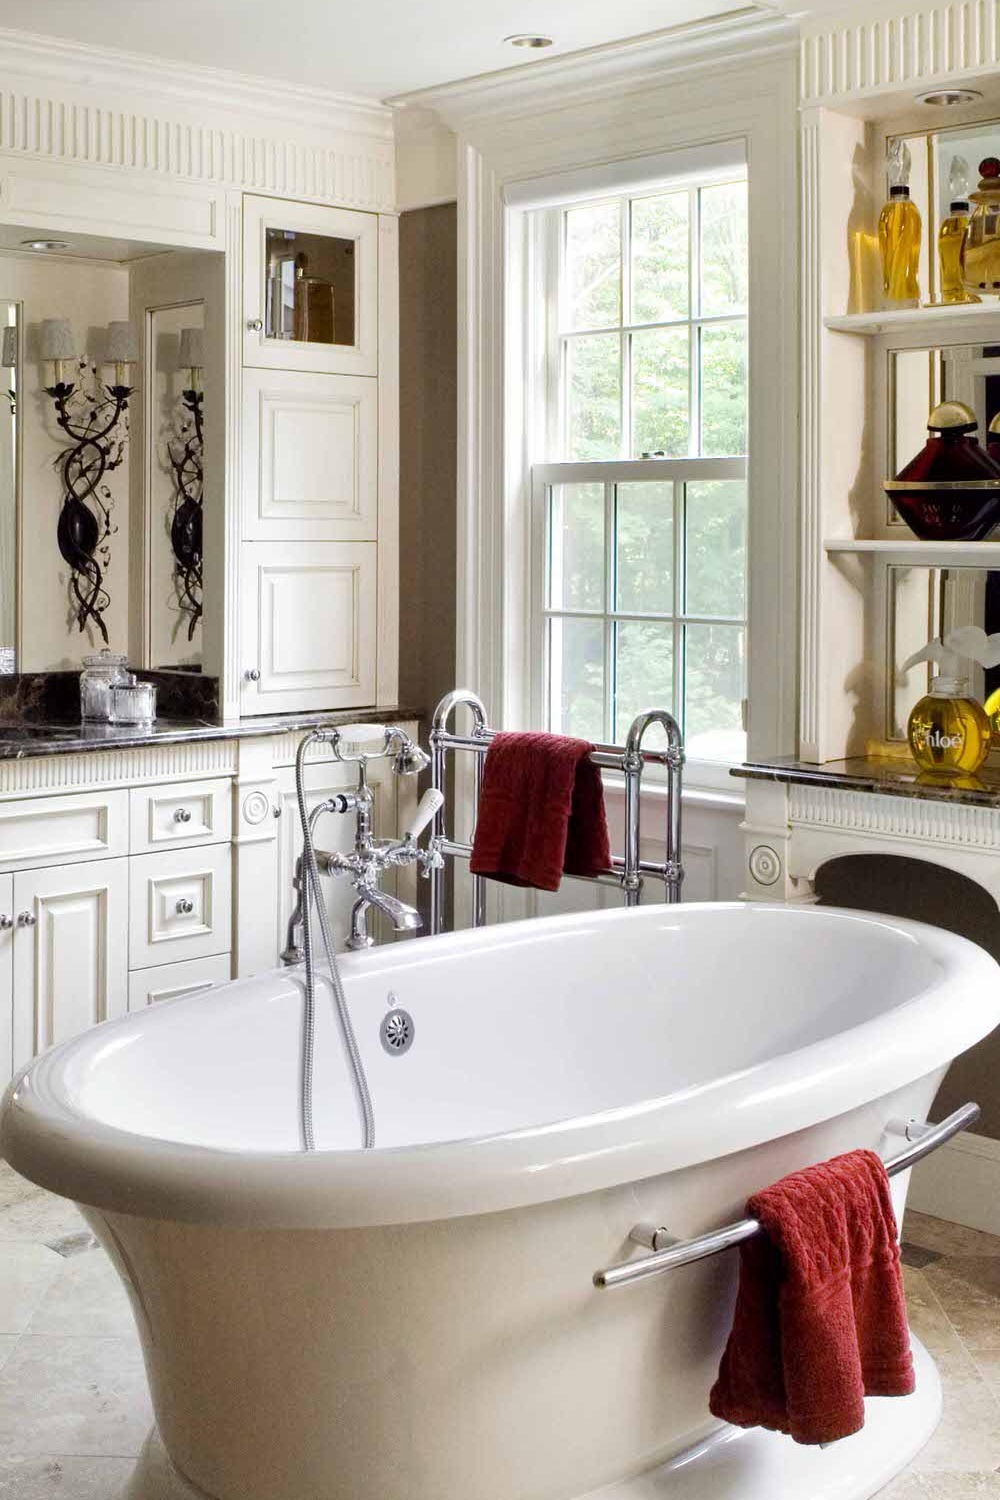 Cream Travertine Floor Tiles White Cabinets Black Countertops Free Standing Bathtub Towel Rack